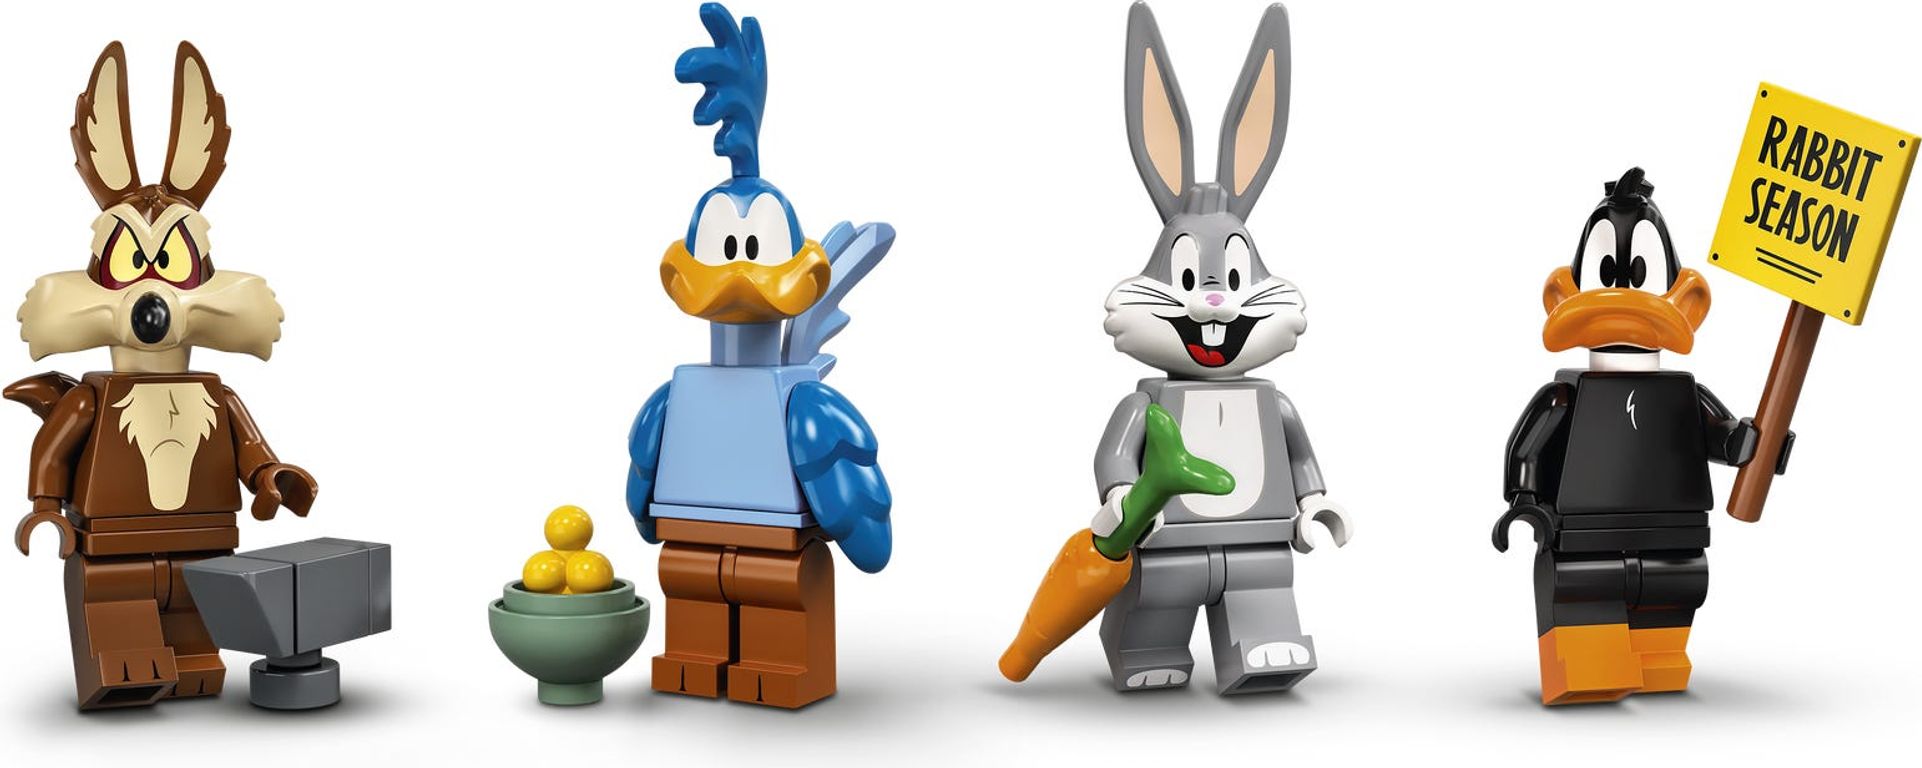 LEGO® Minifigures Looney Tunes™ minifiguras